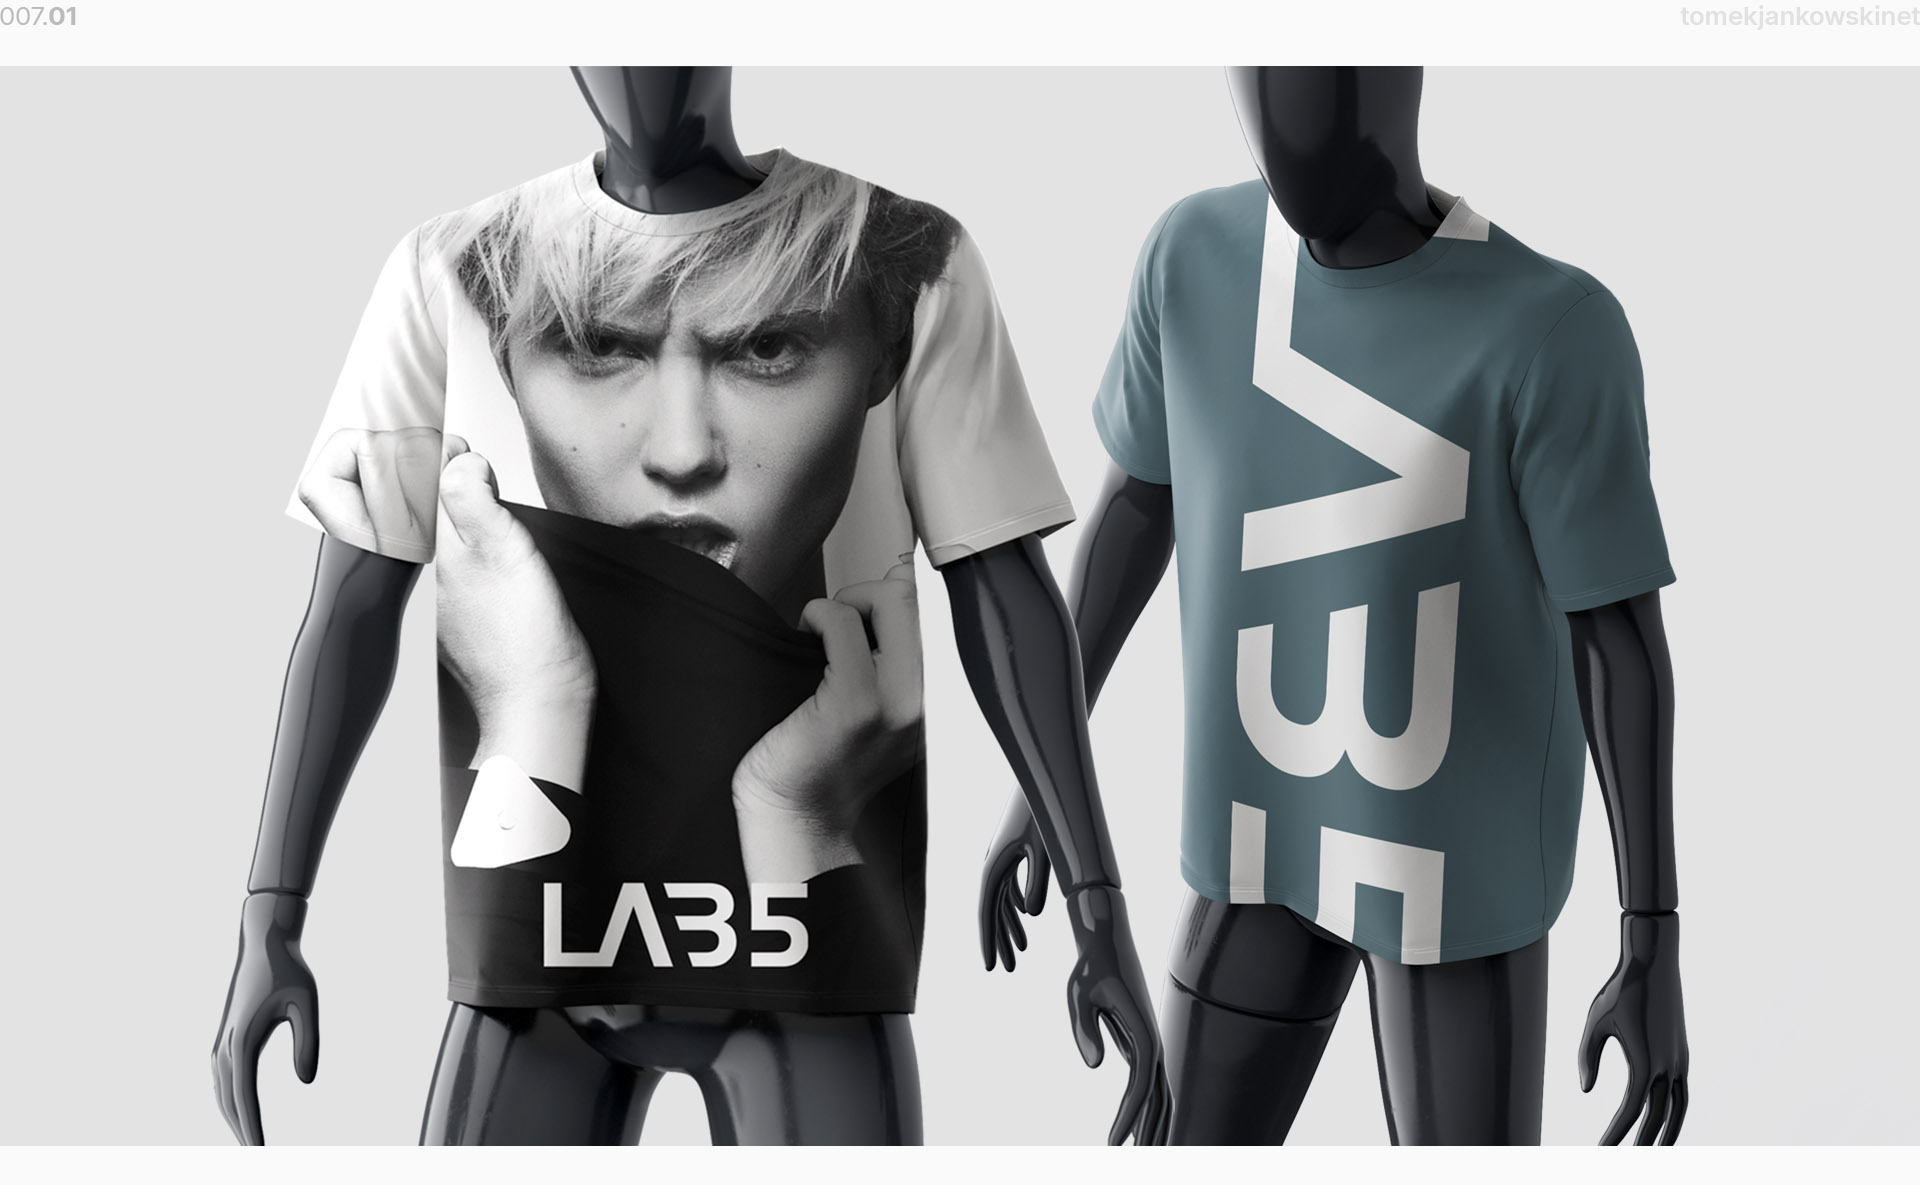 Tomek Jankowski Design Identity - LAB35 Clothing